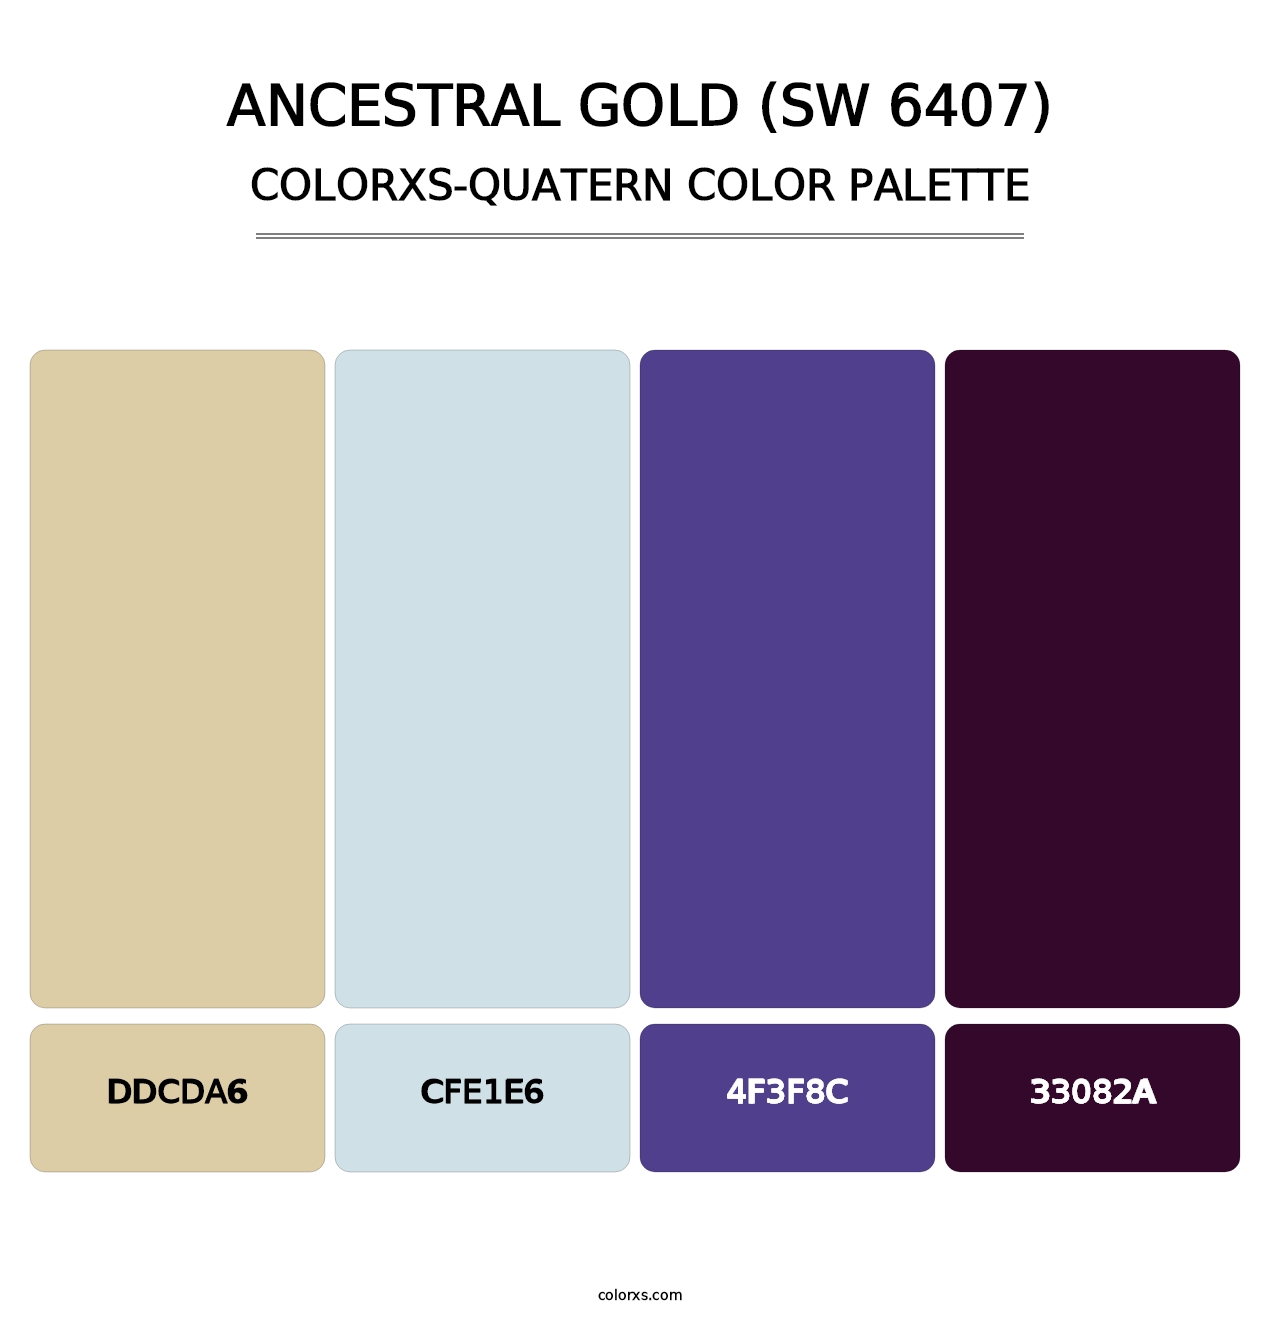 Ancestral Gold (SW 6407) - Colorxs Quatern Palette